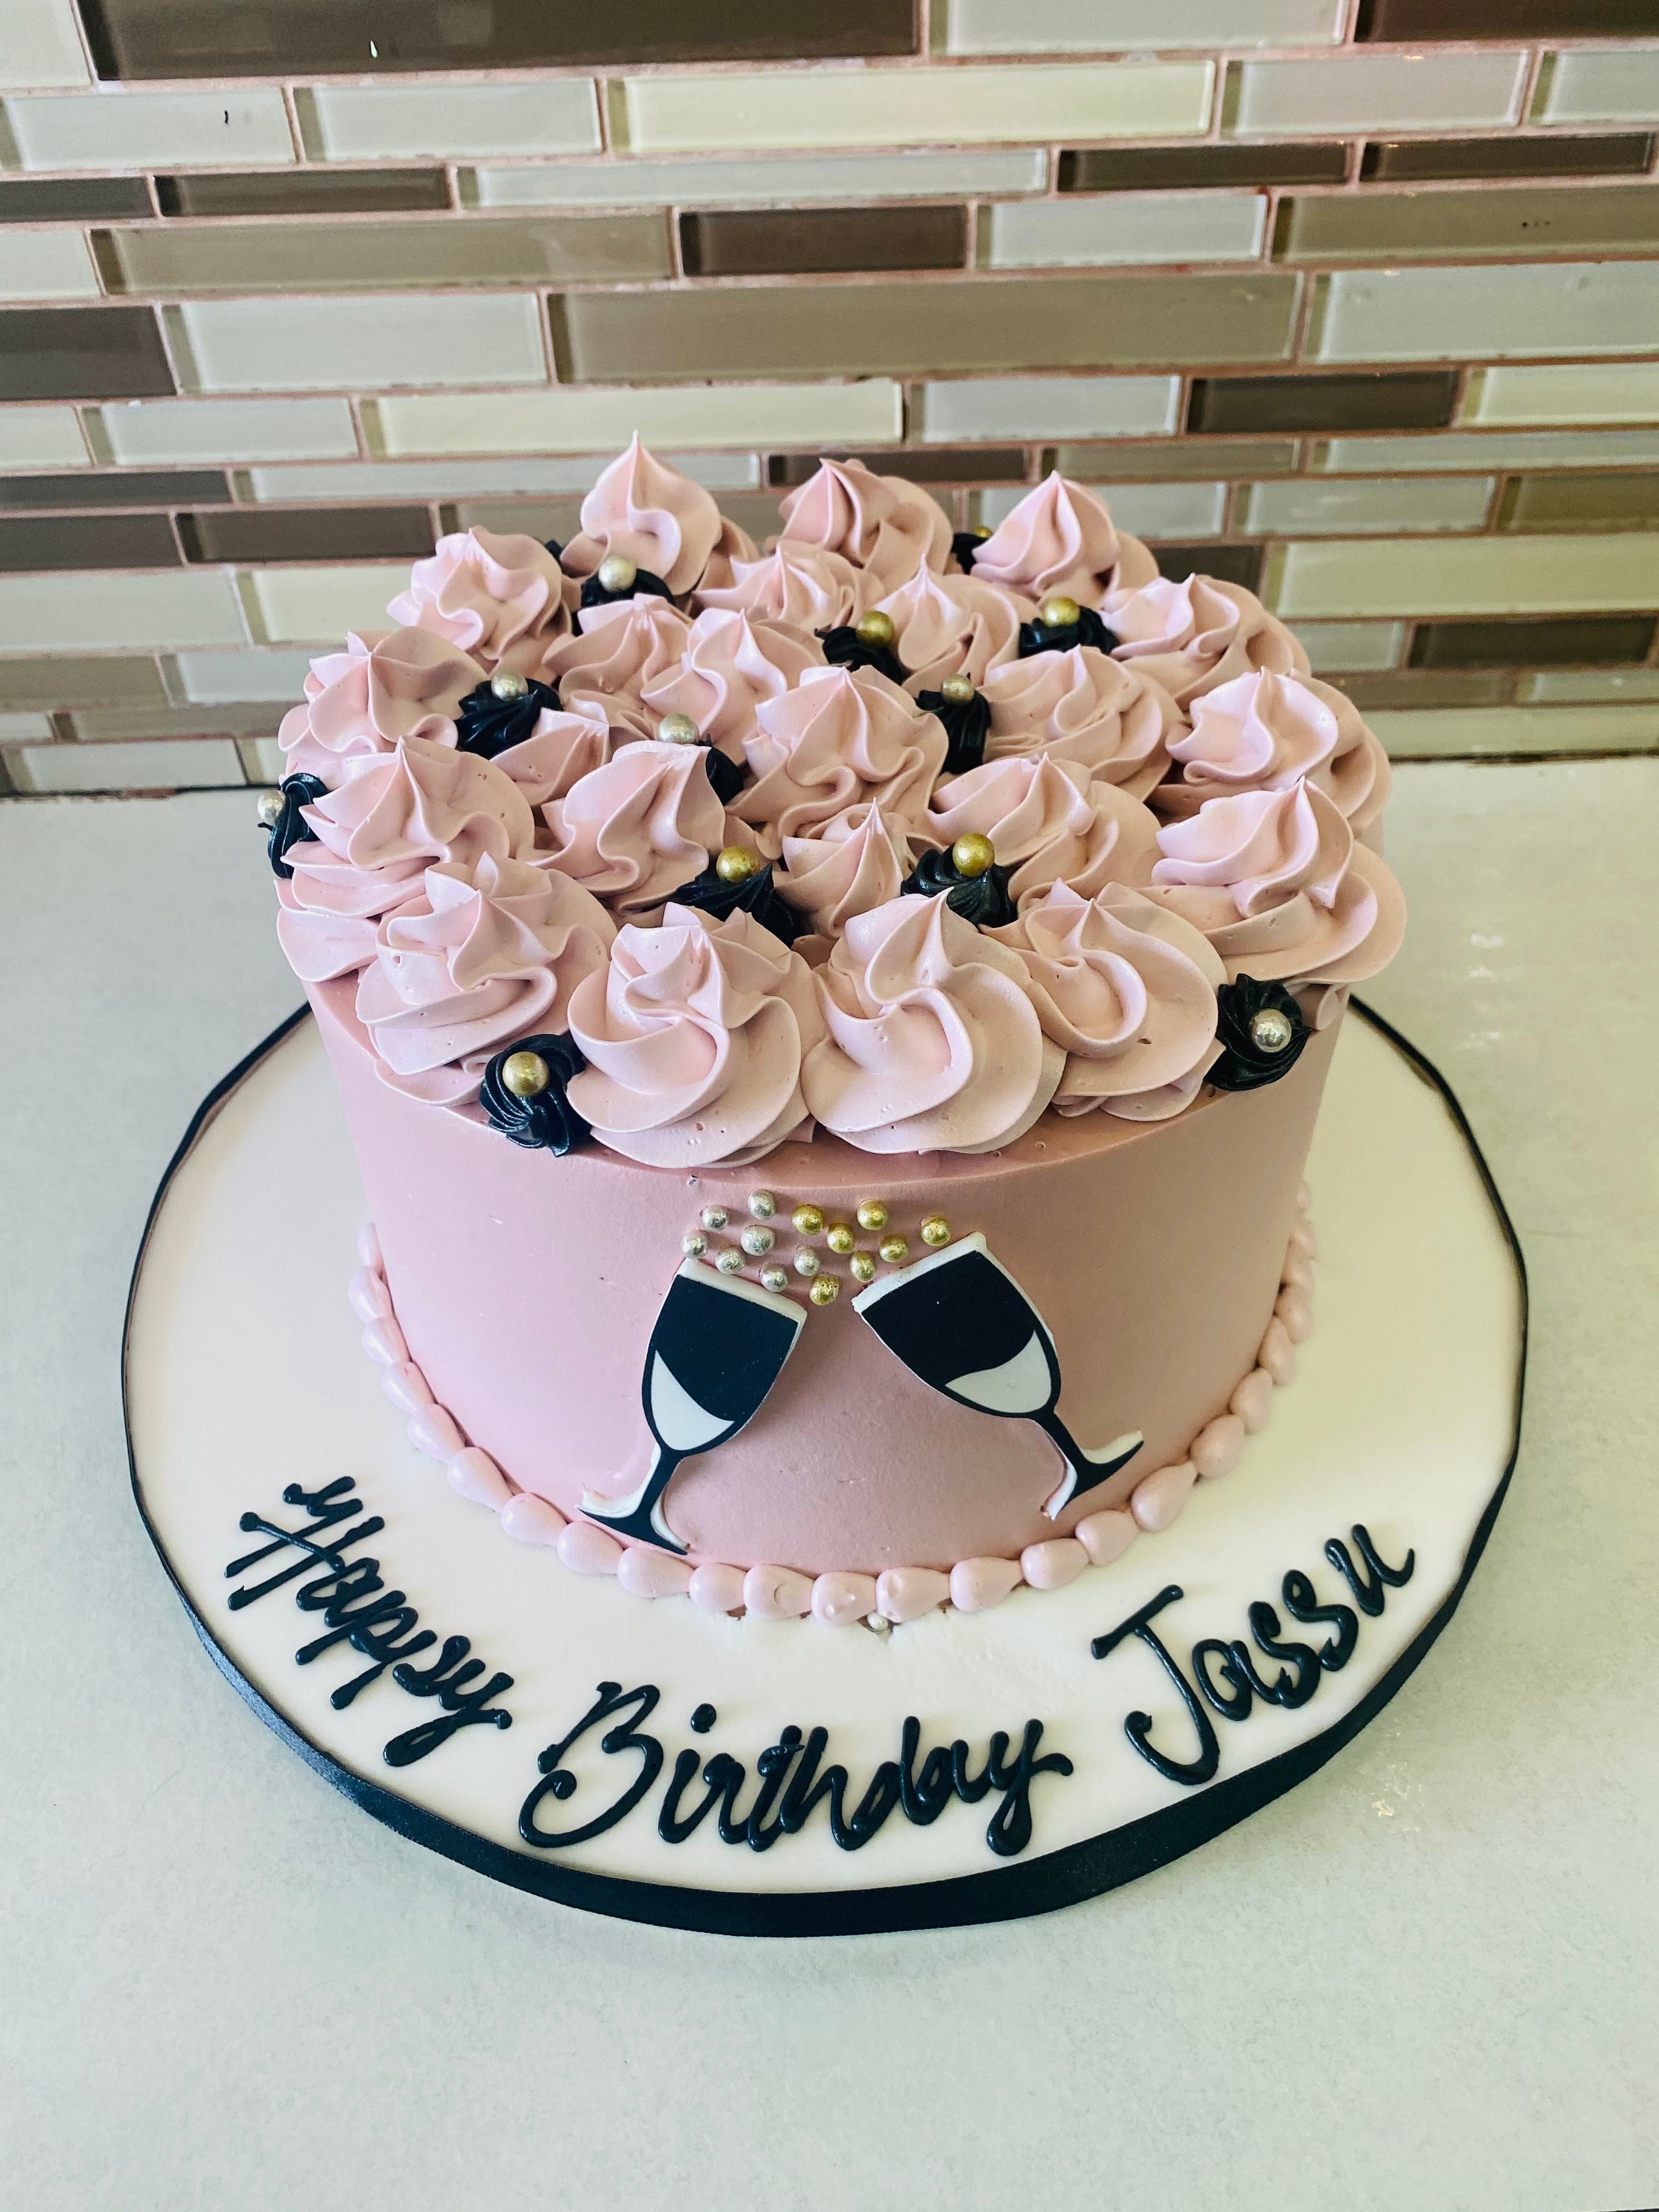 valid-badger658: birthday cake, rose, wine glass